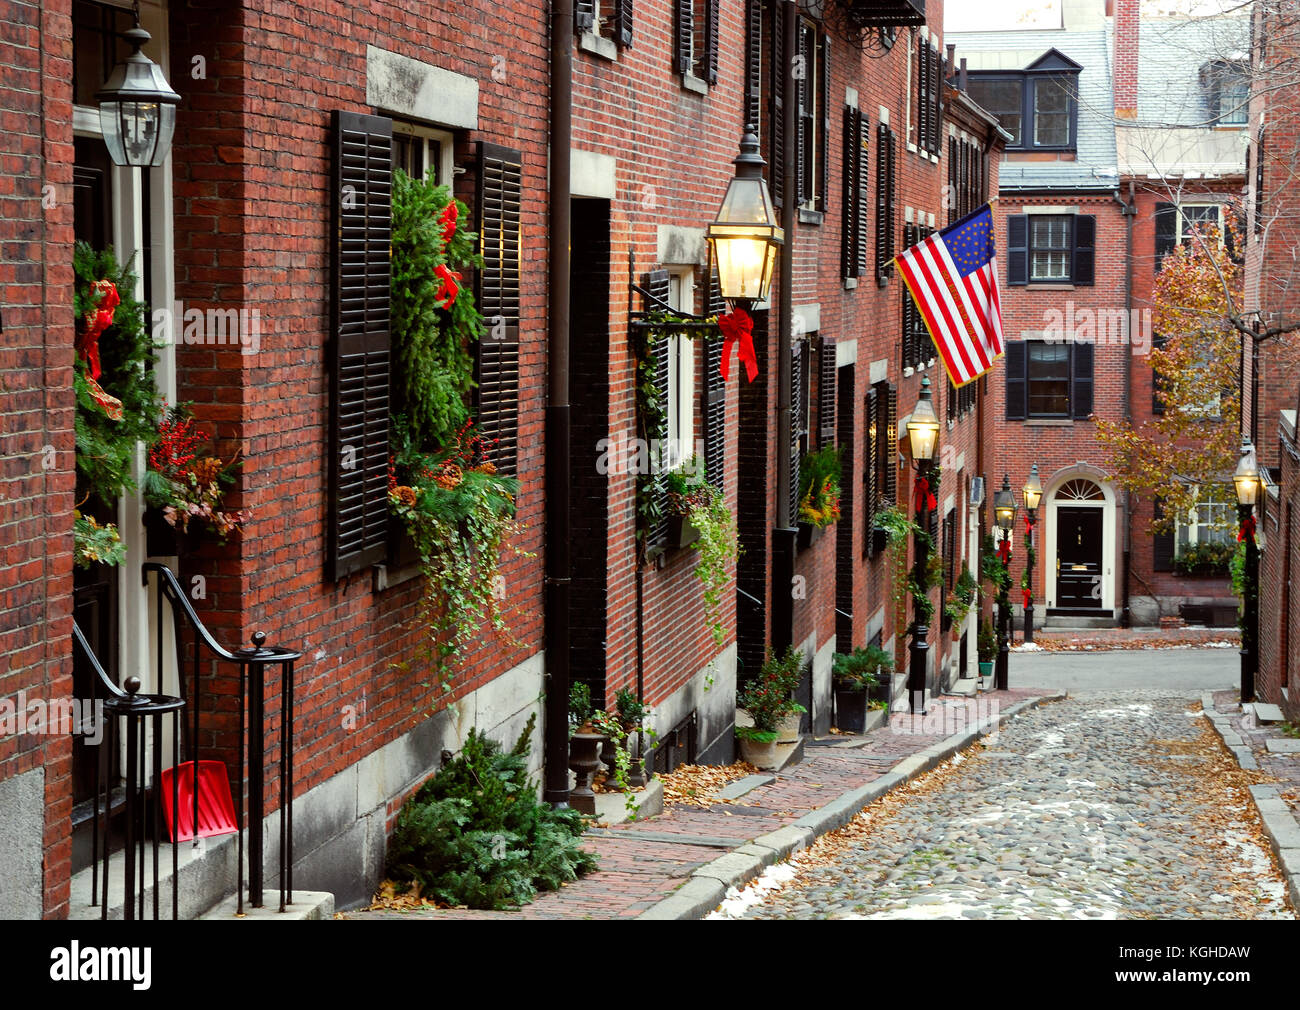 Historic Acorn Street in Beacon Hill, Boston. Christmas decorations, historic American flag, cobblestone pavers, street lamps. Stock Photo